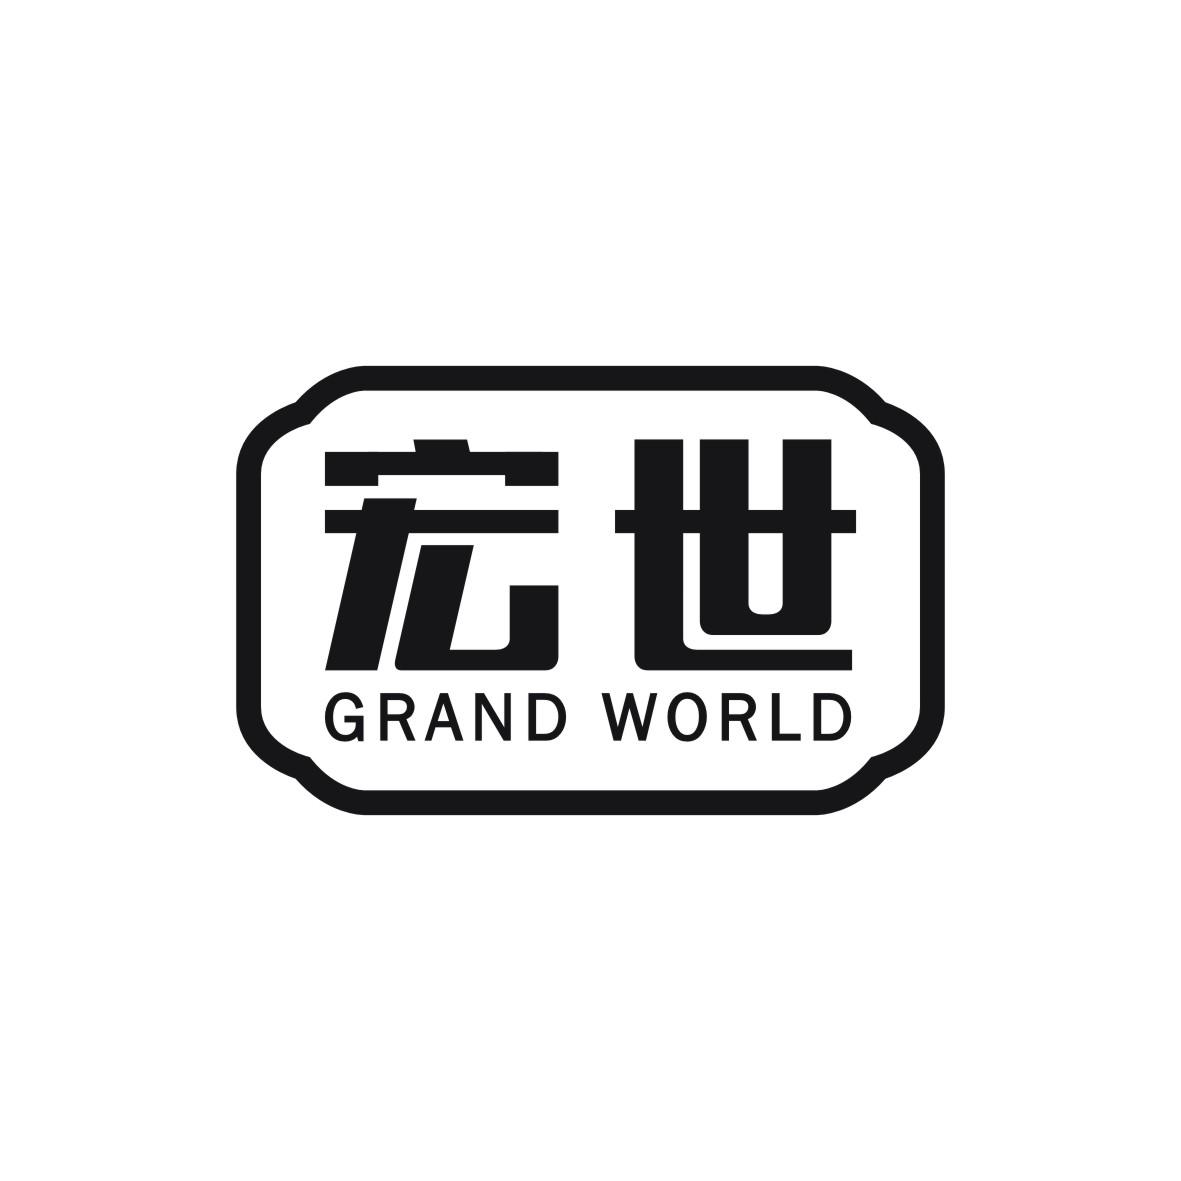  GRAND WORLD